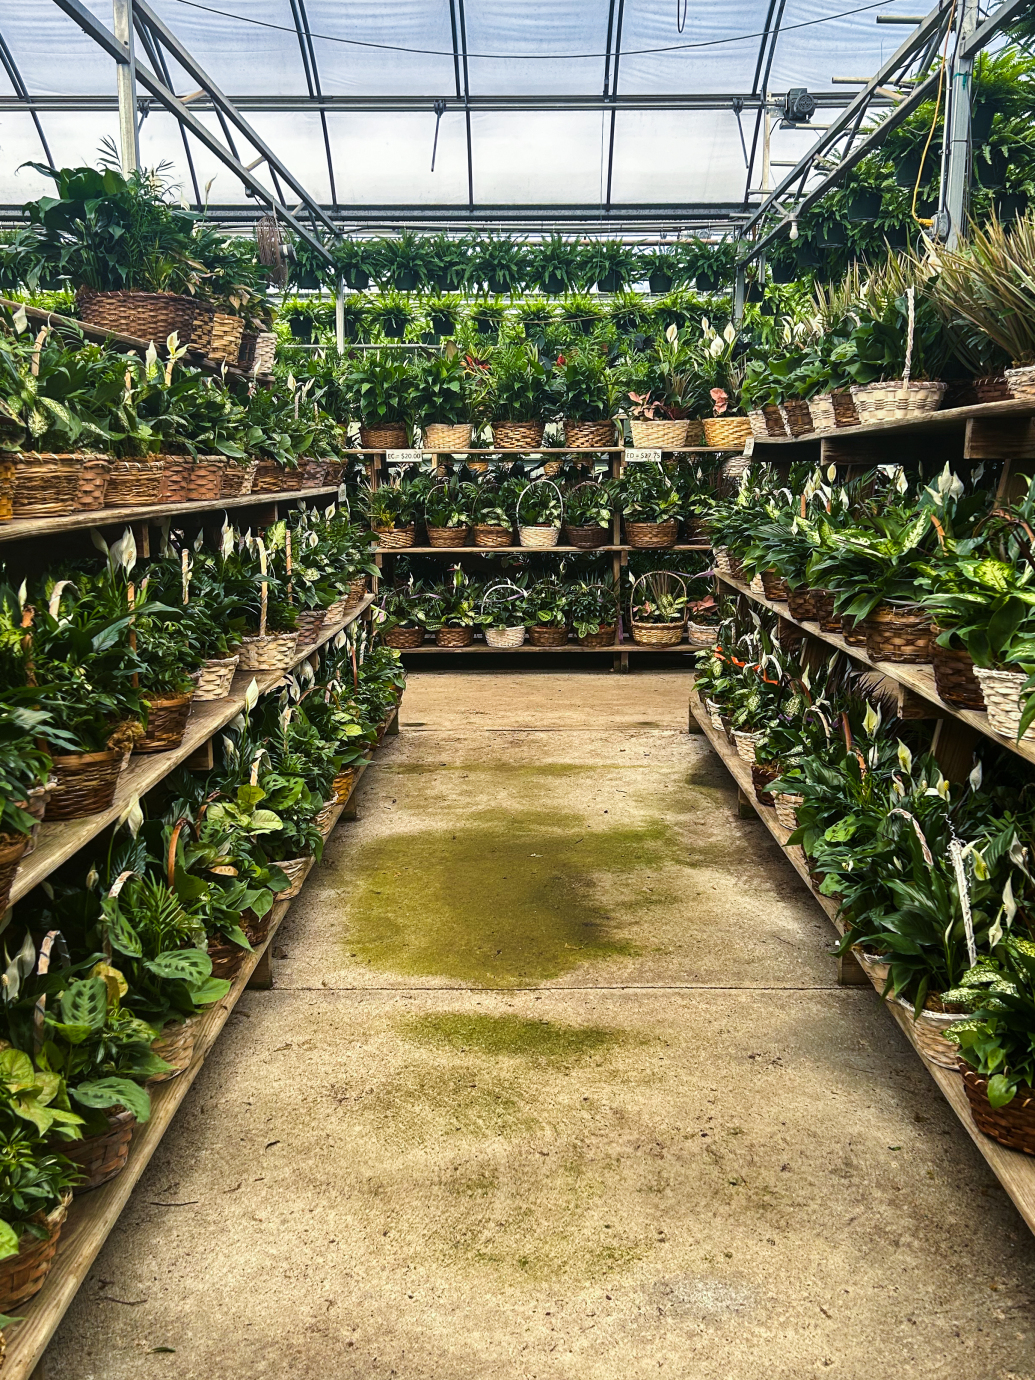 shelves of plants